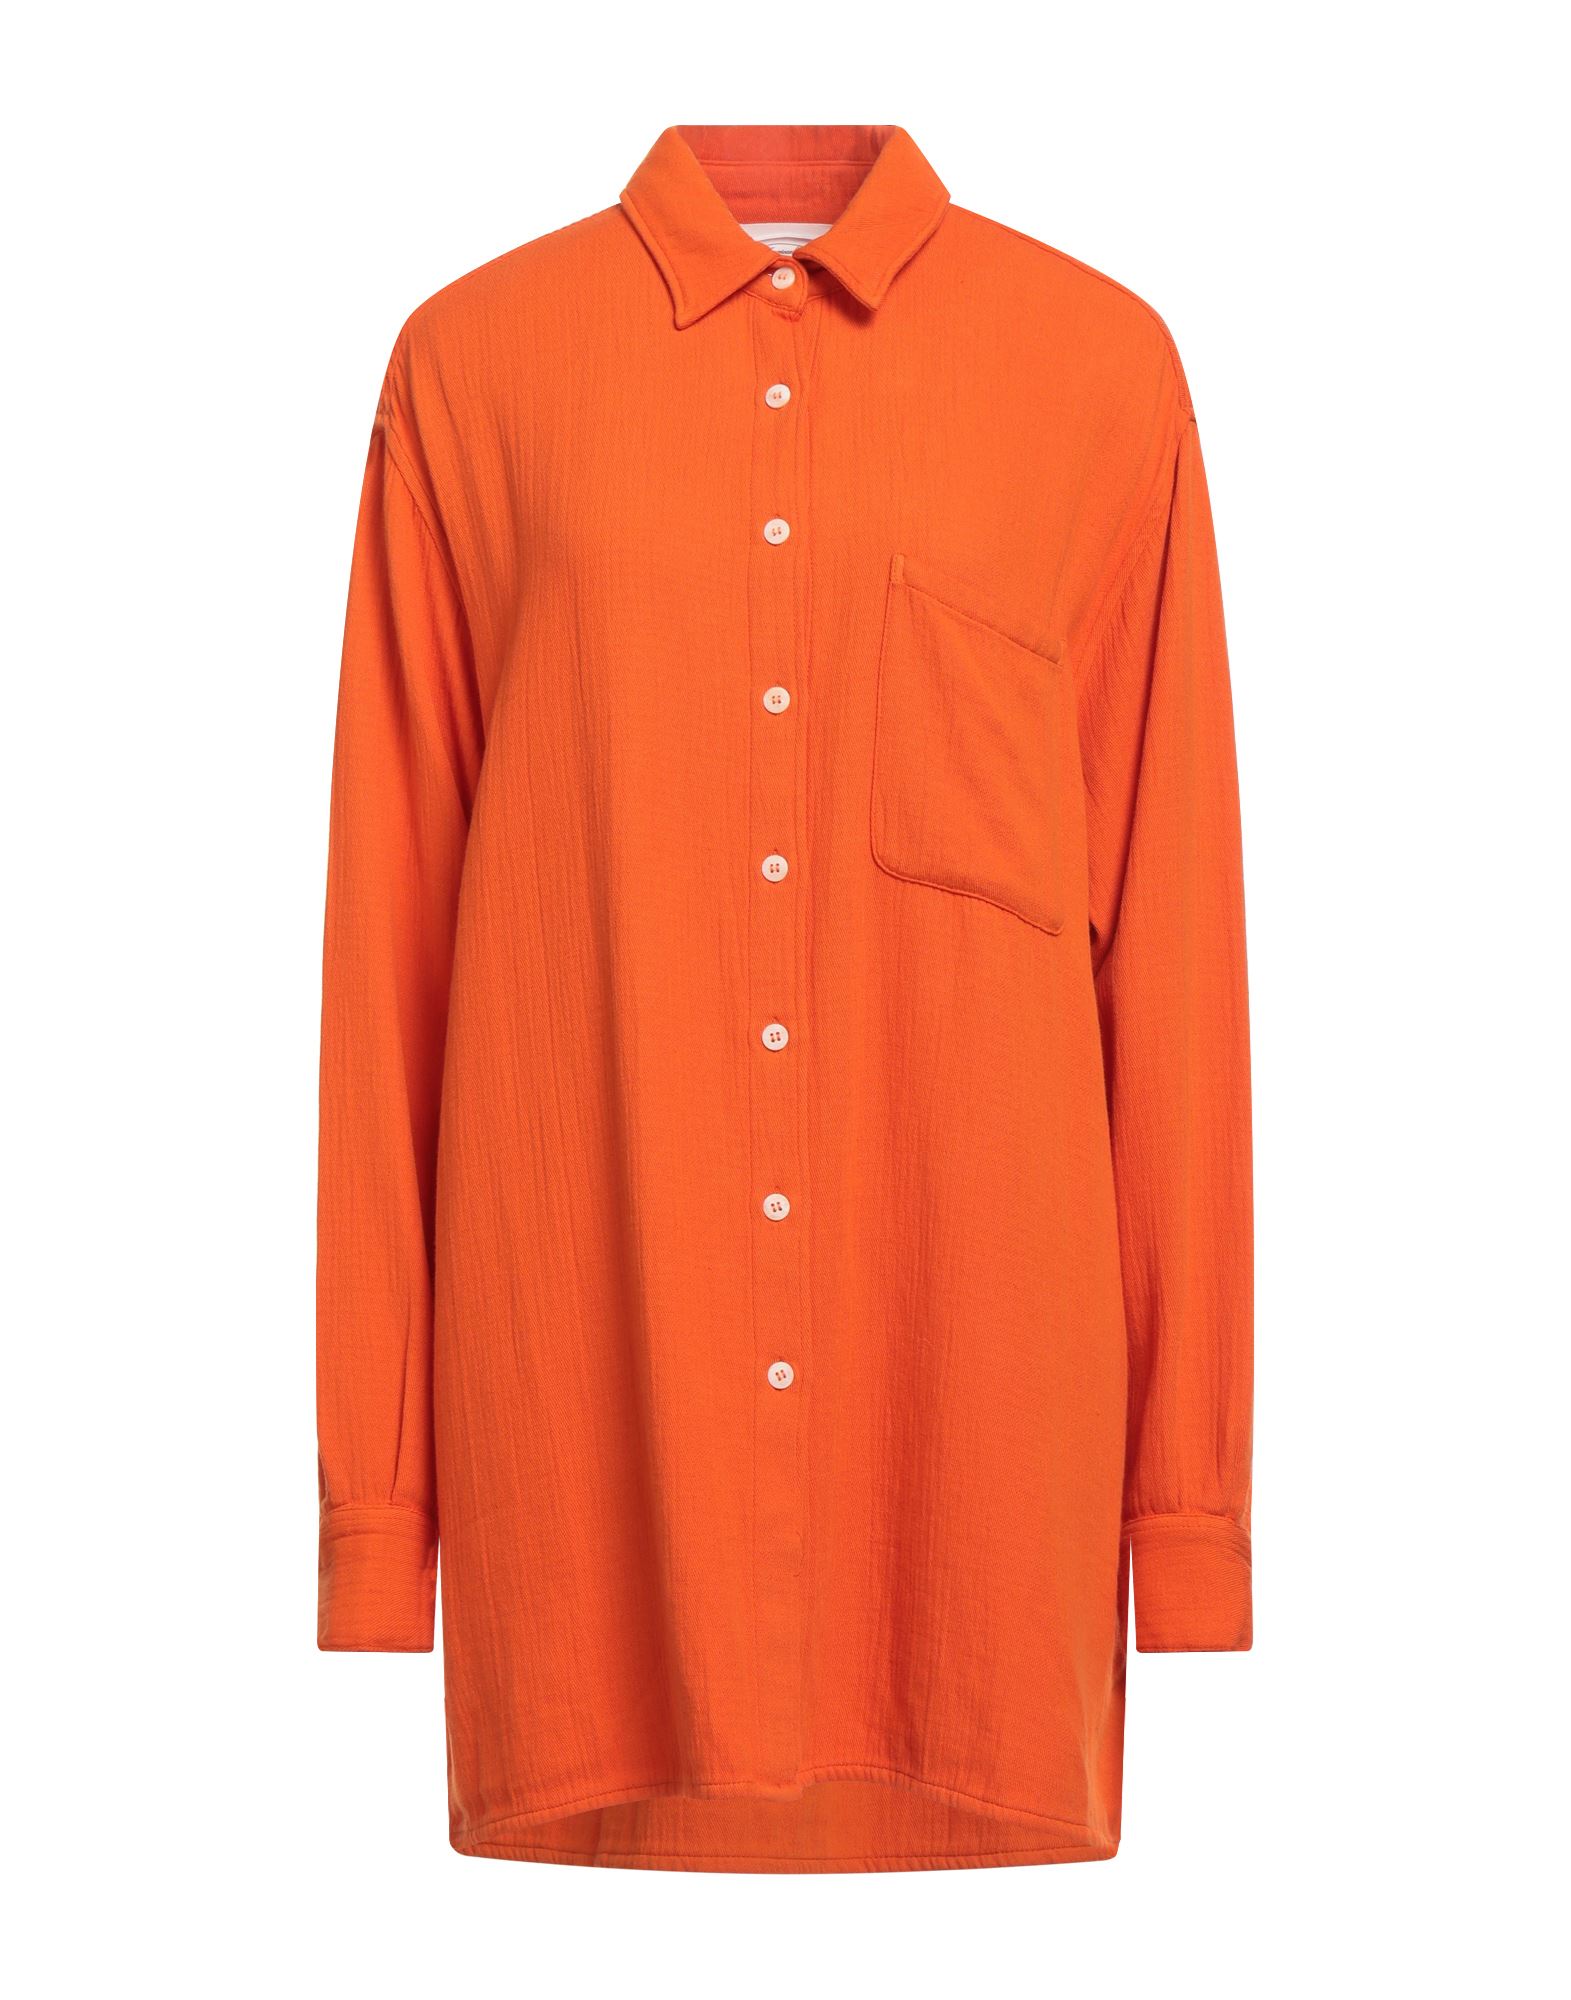 American Vintage Shirts In Orange